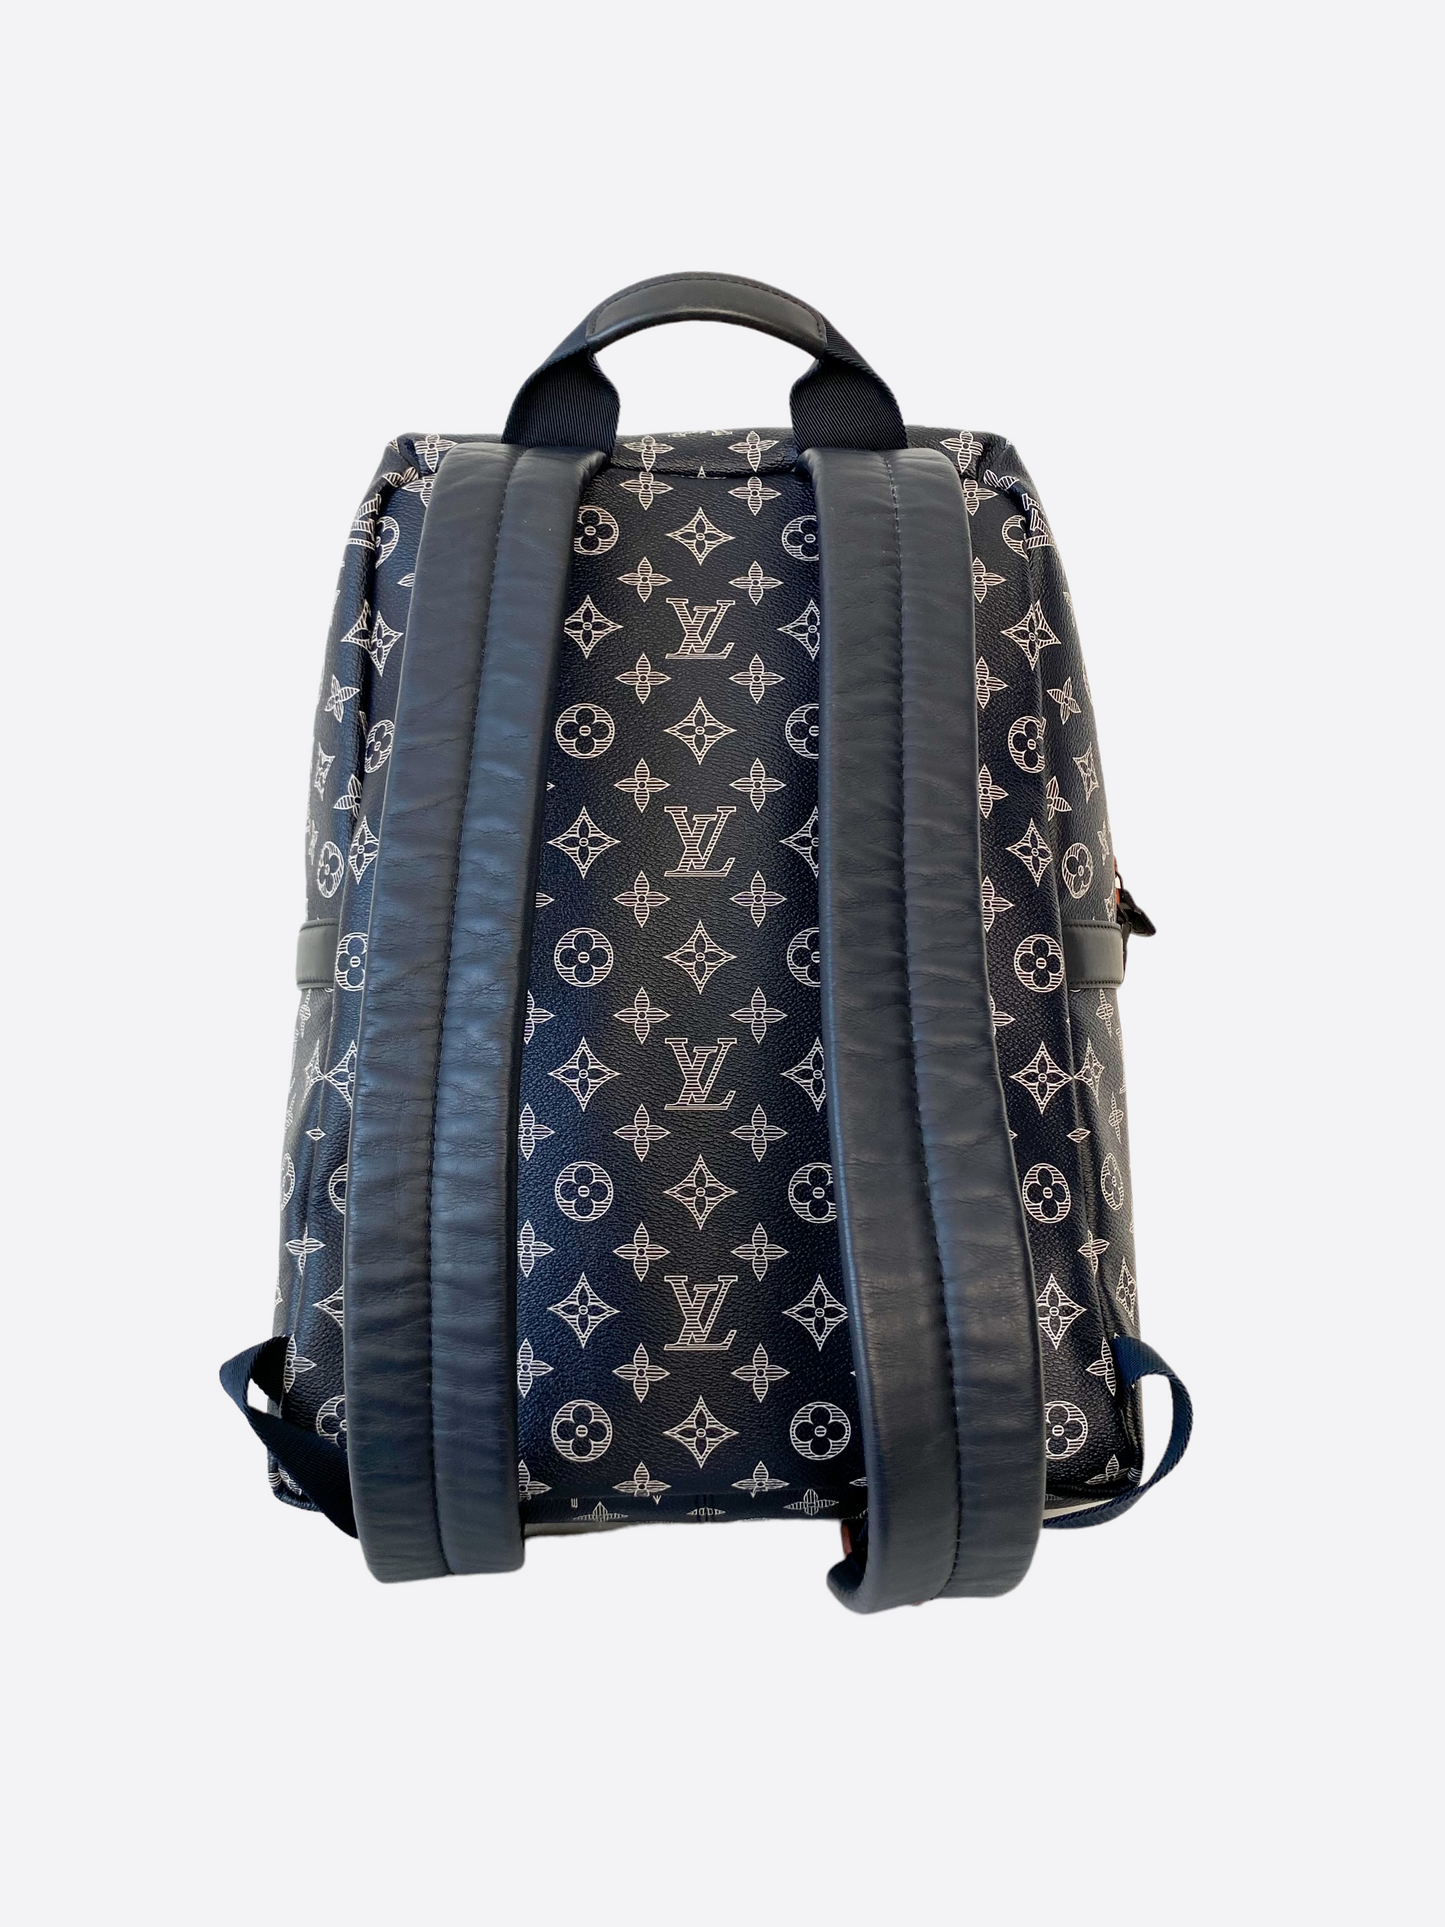 Louis Vuitton Kim Jones Upside Down Monogram Backpack